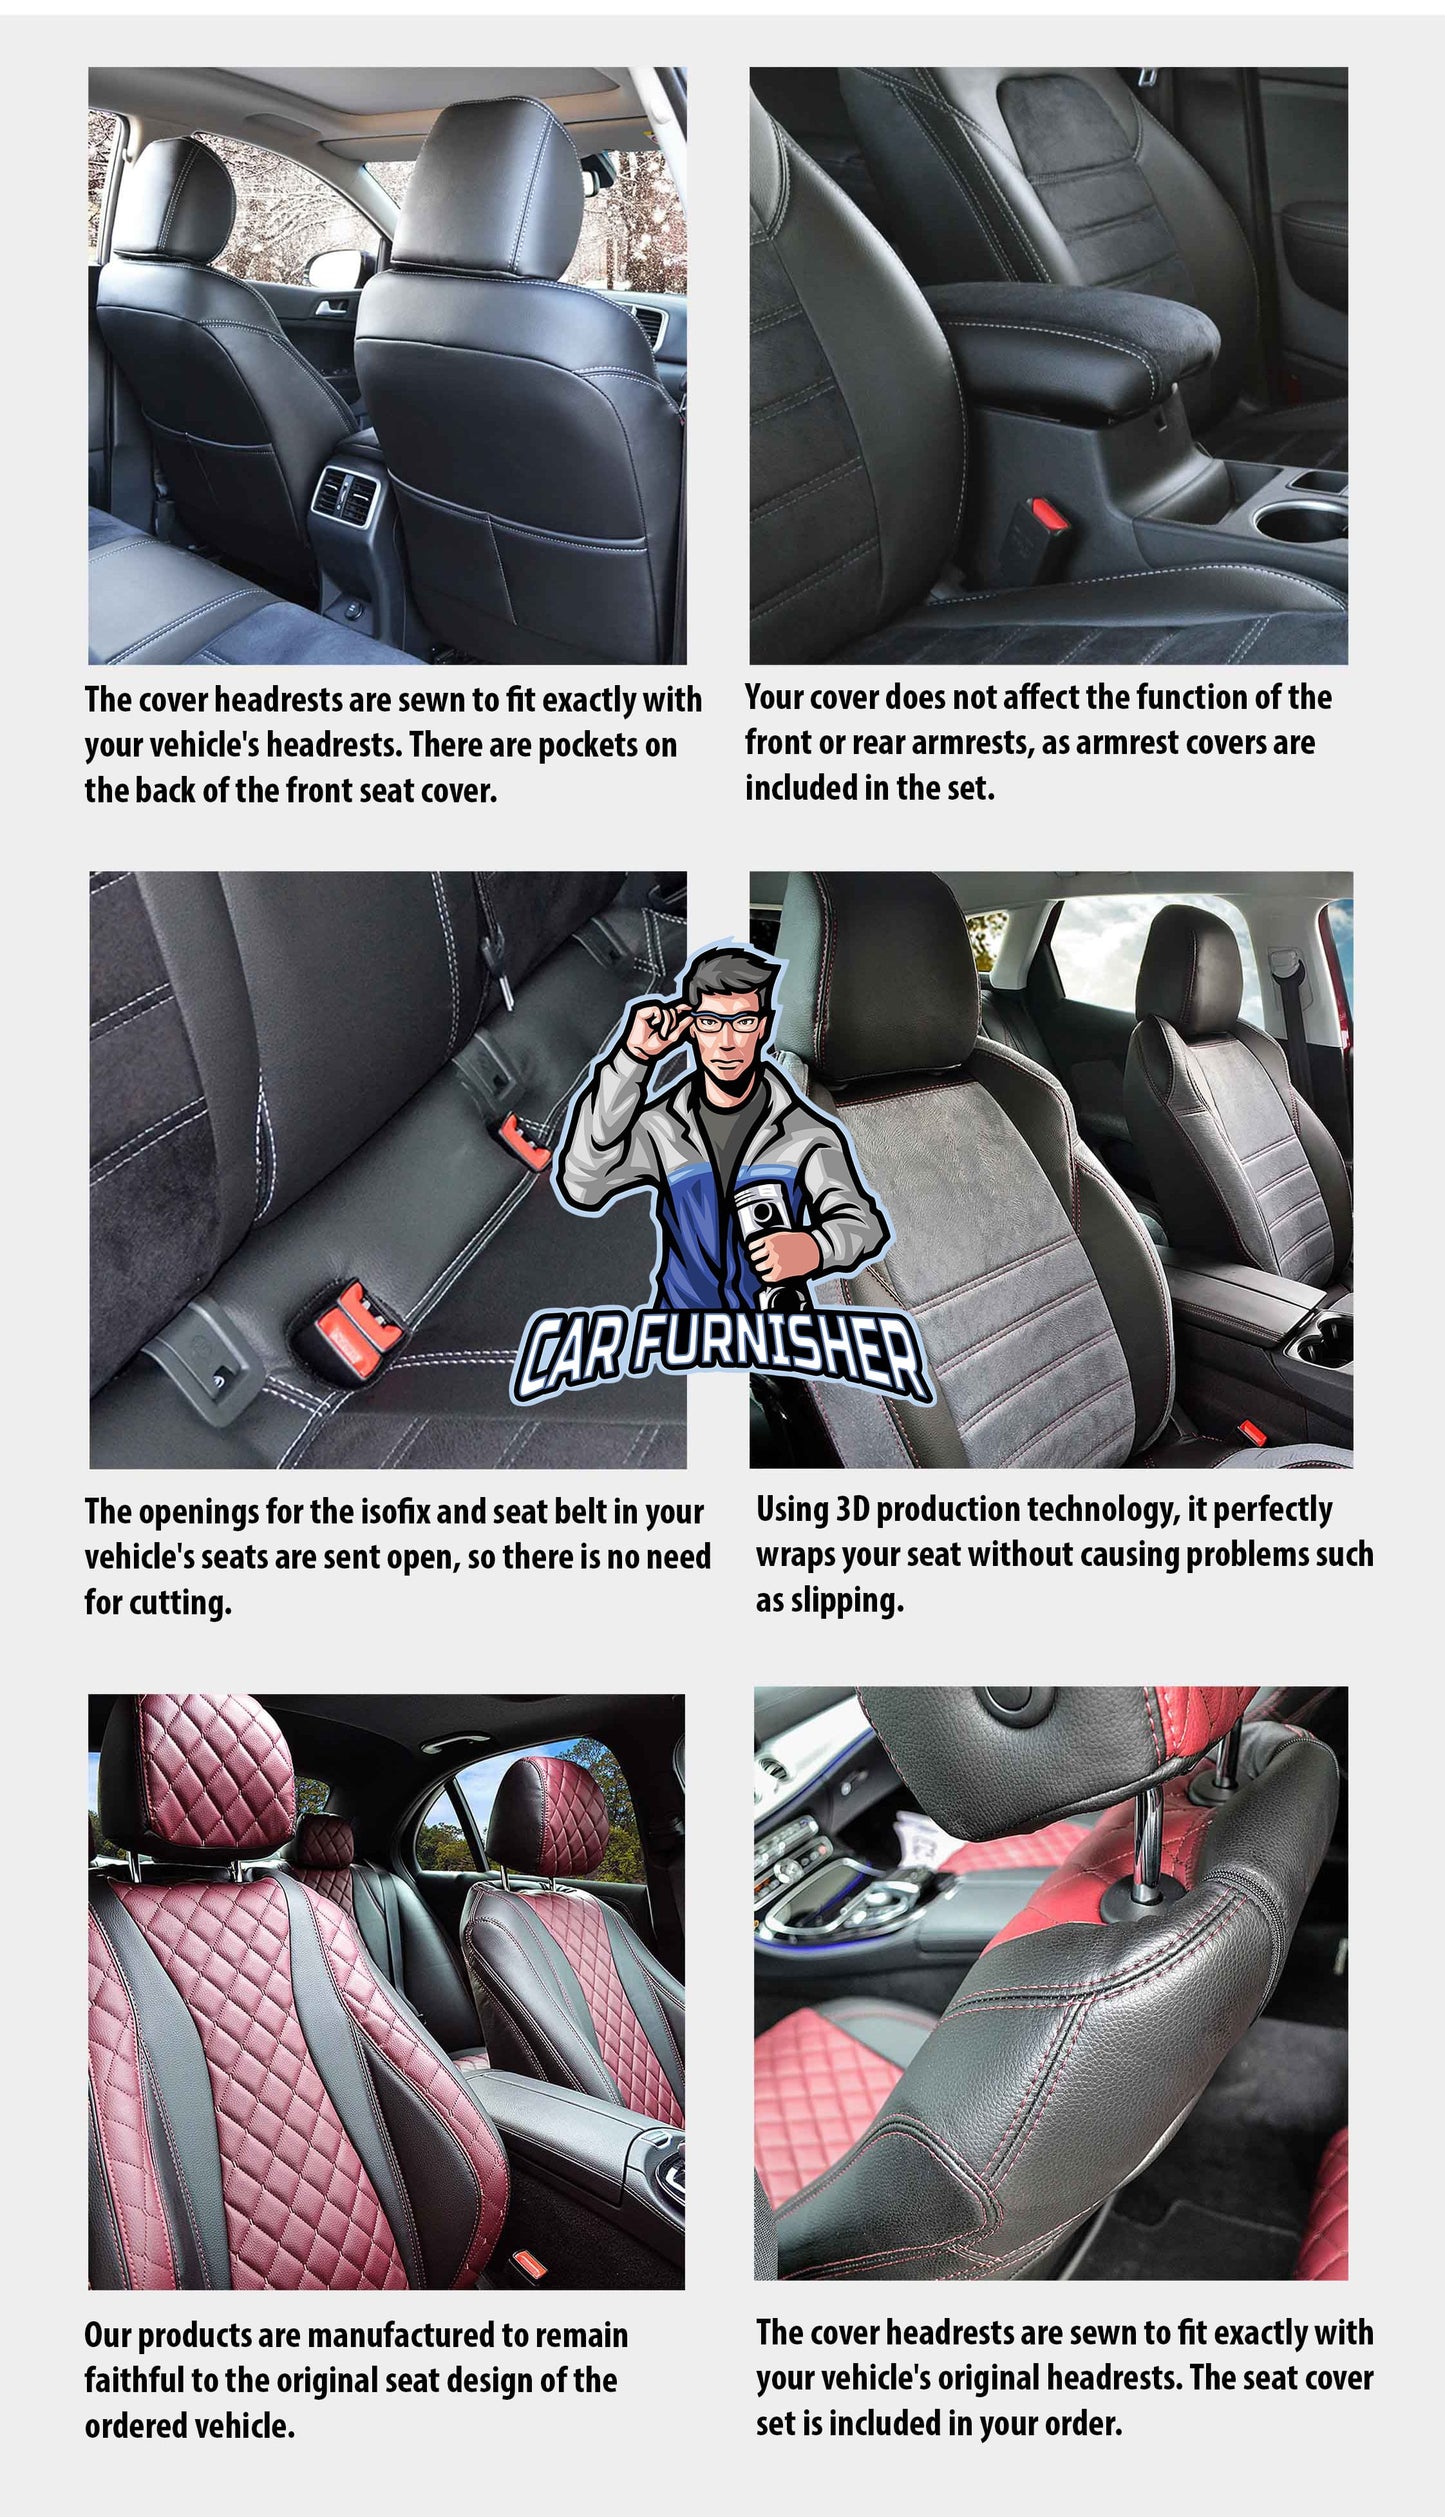 Honda CRV Seat Covers Paris Leather & Jacquard Design Black Leather & Jacquard Fabric